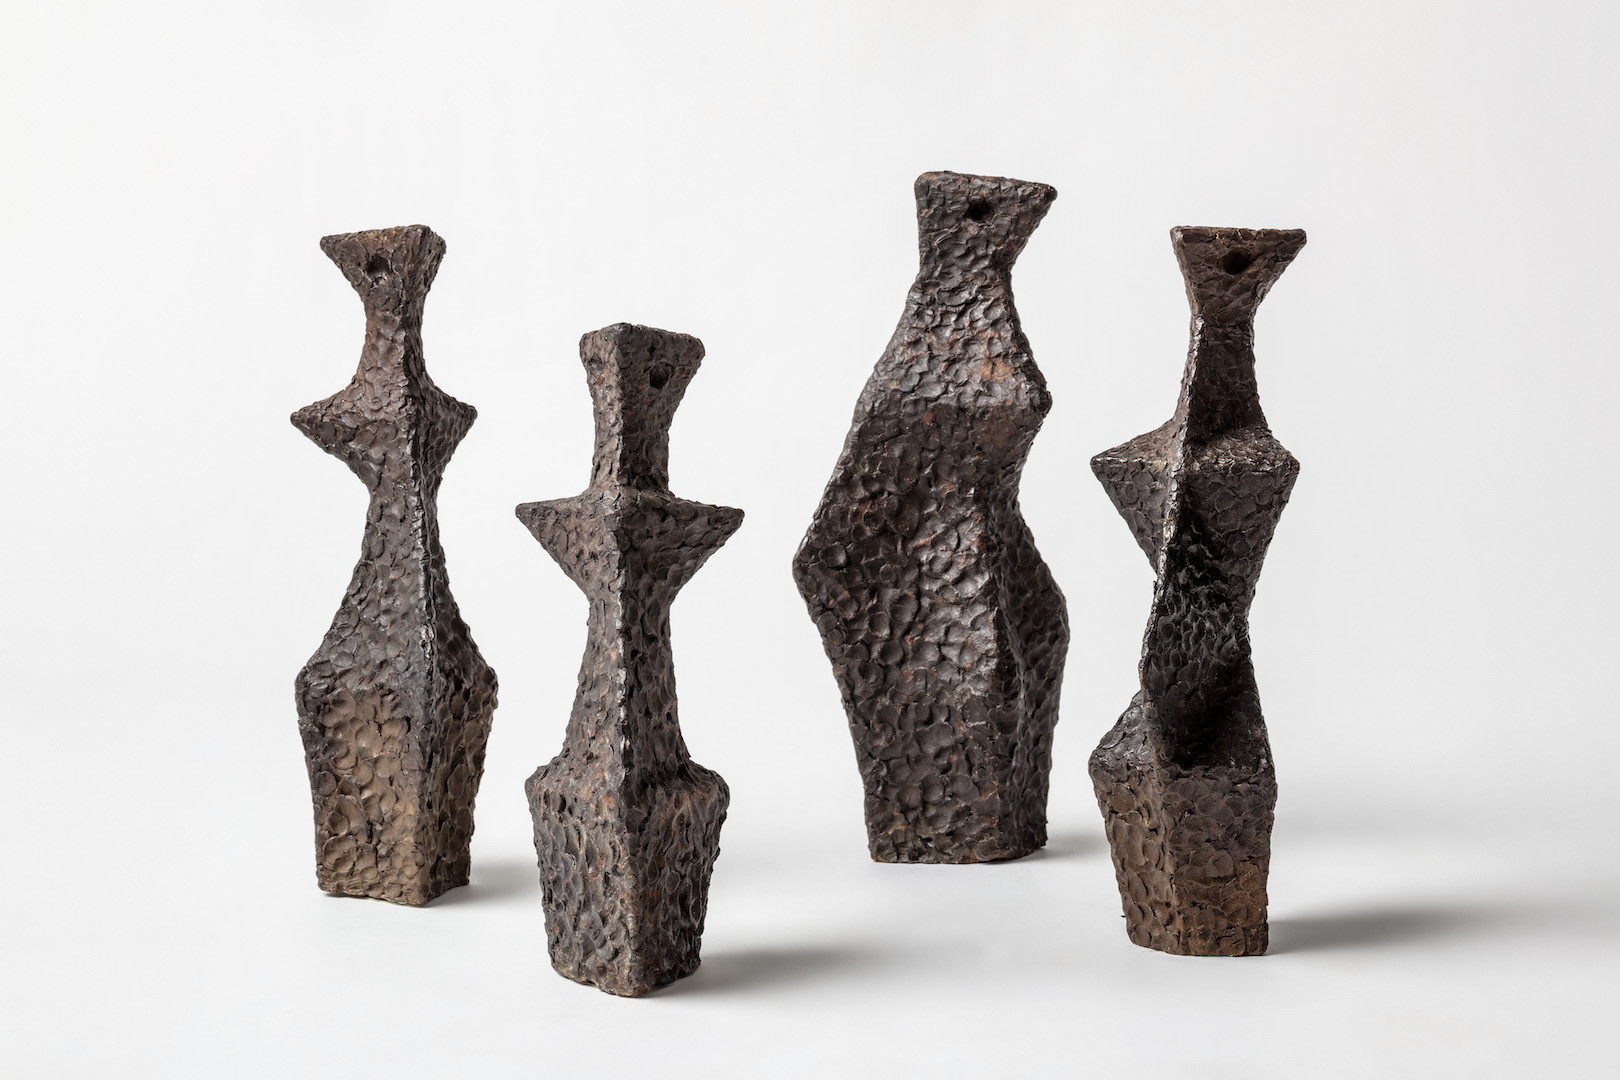 03. Sonja Ferlov Mancoba 4 sculptures Sans titre, 1957-59 Terre cuite. Silkeborg, Museum Jorn. © Anders Sune Berg © Adagp, Paris, 2019